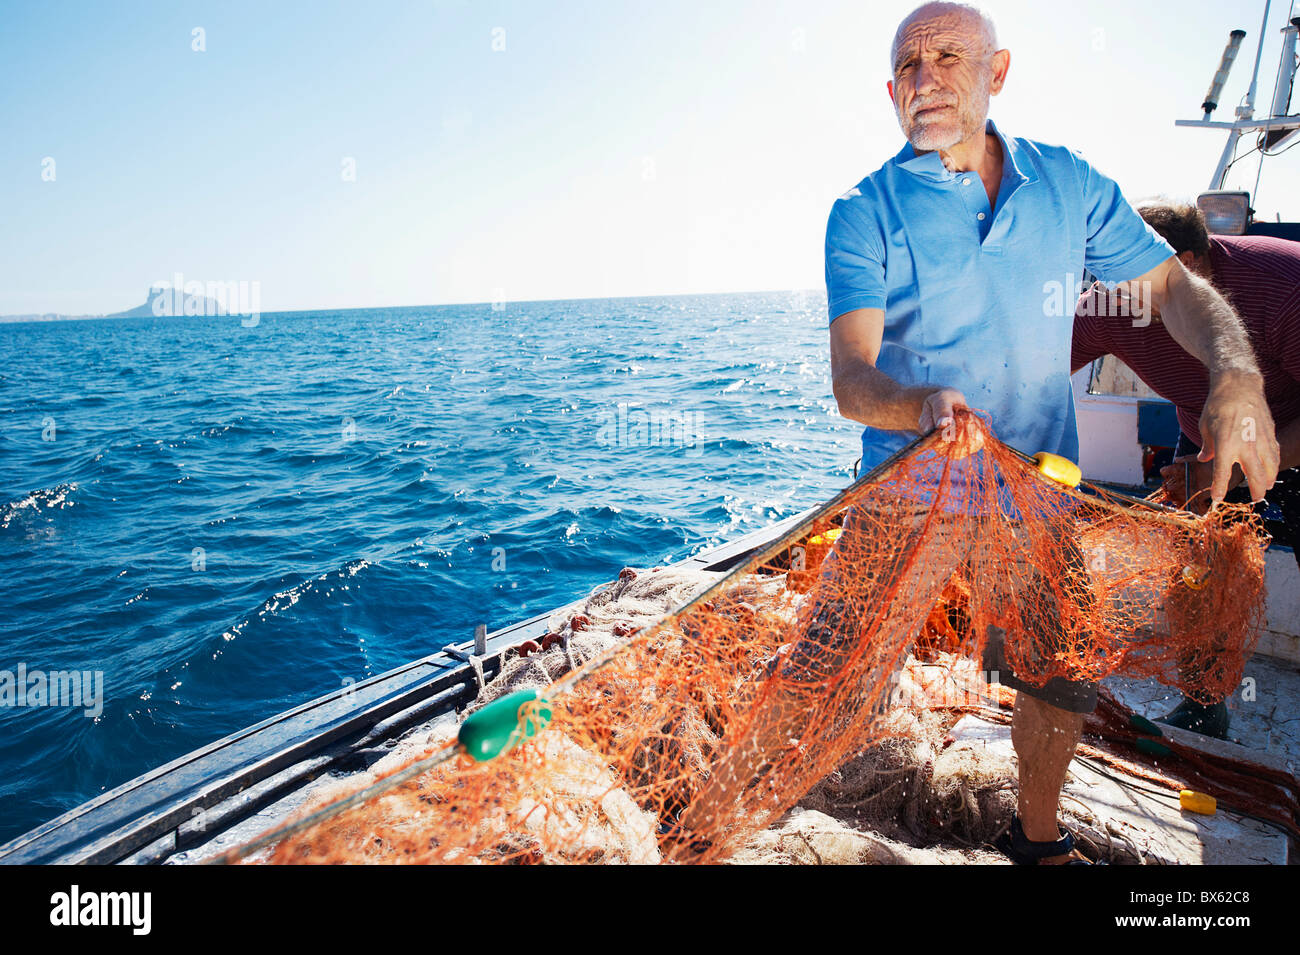 Fischer am Boot ziehen in Netzen Stockfoto